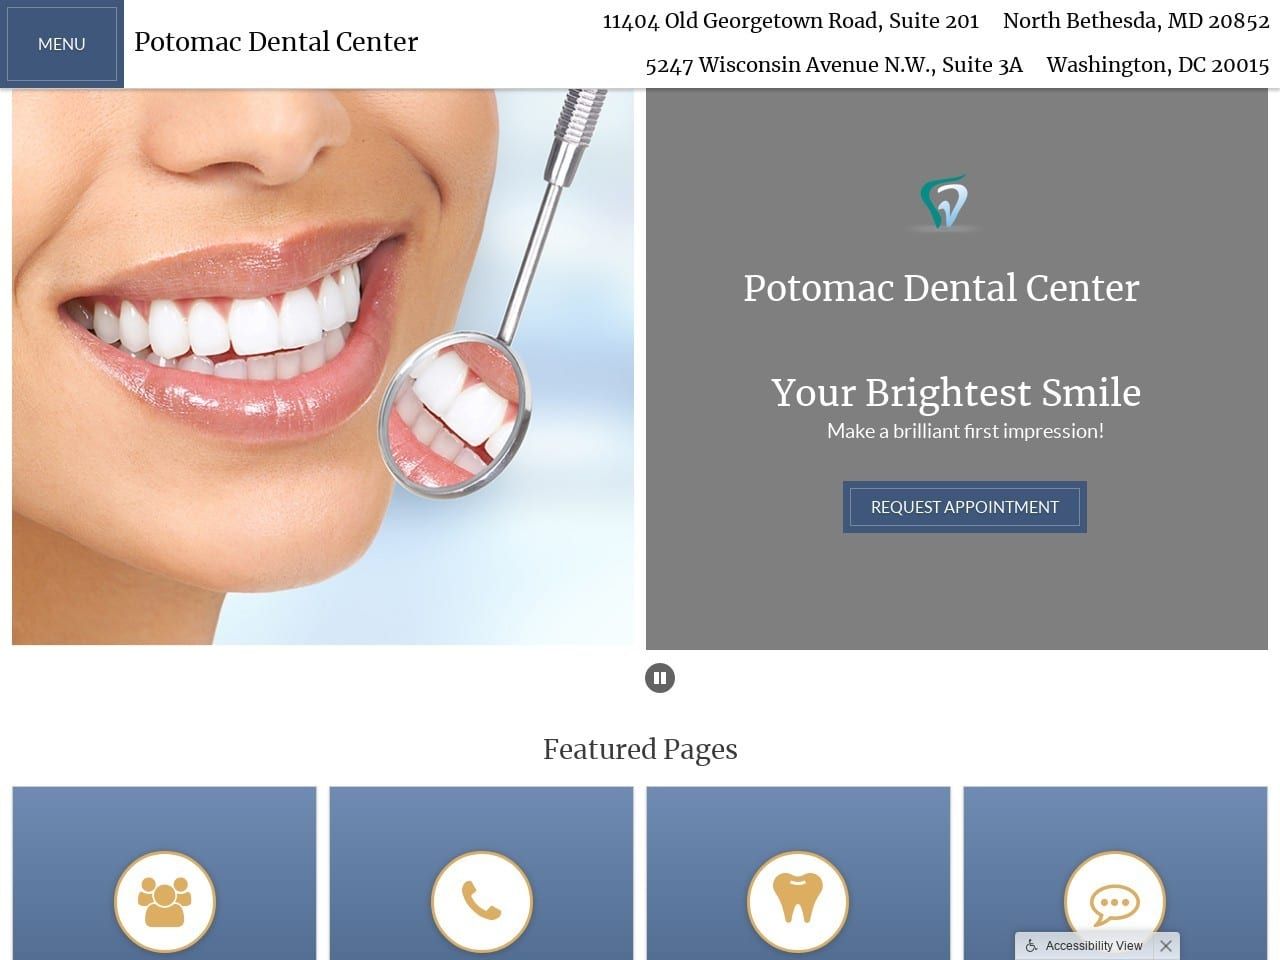 Potomac Dental Center Website Screenshot from potomacdentalcenter.com